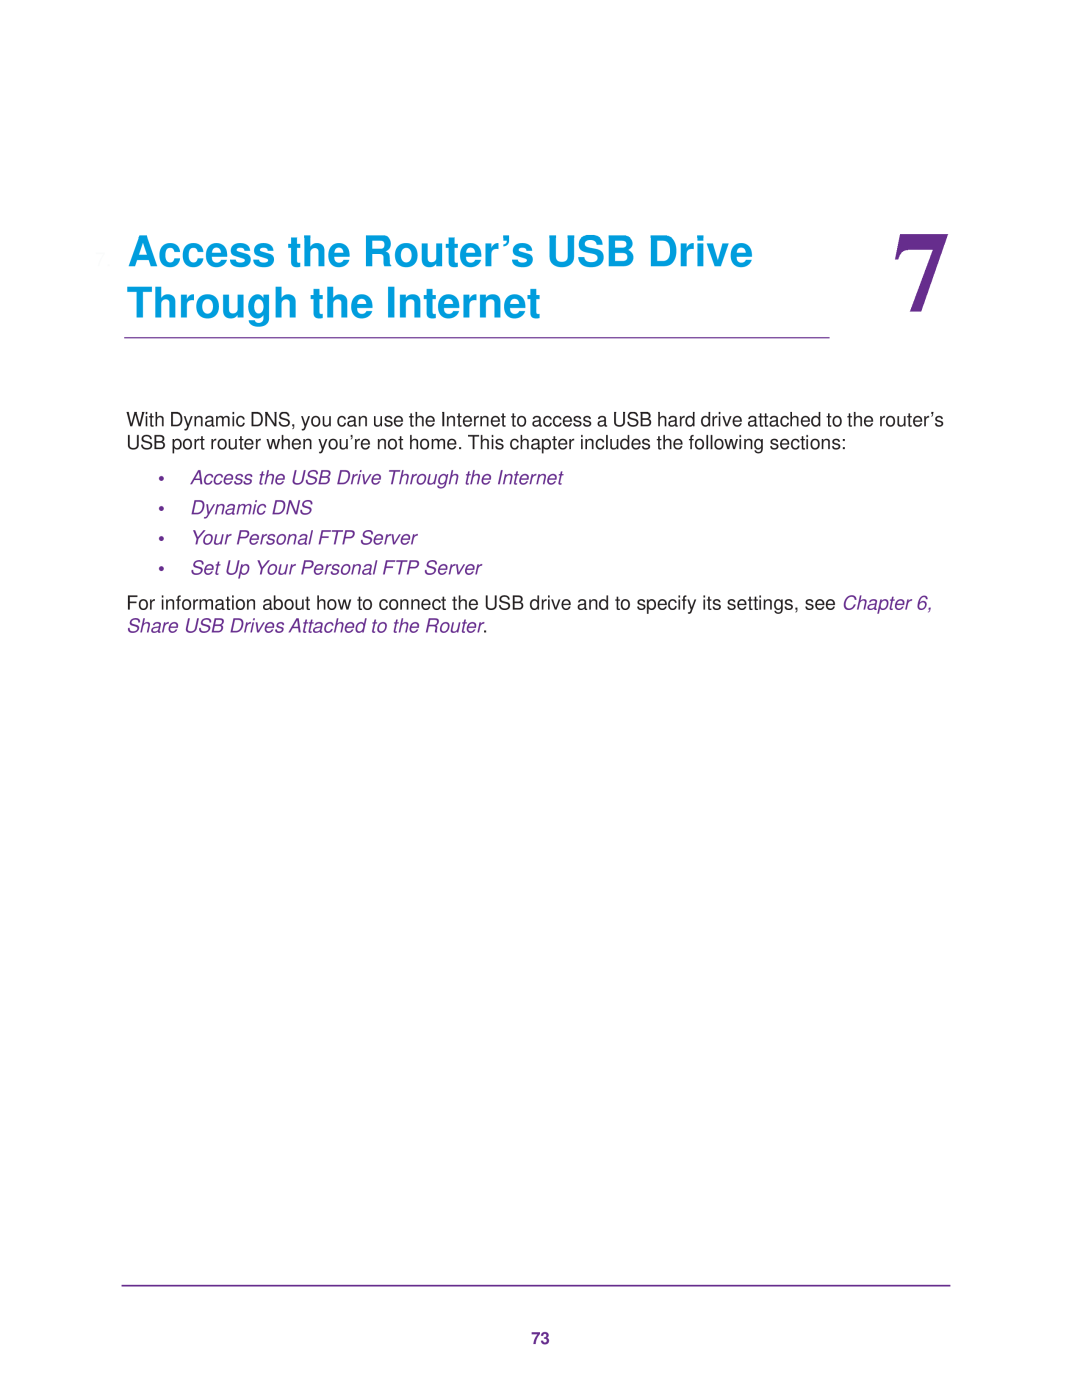 NETGEAR R7000 user manual Access the Router’s USB Drive, Access the USB Drive Through the Internet Dynamic DNS 